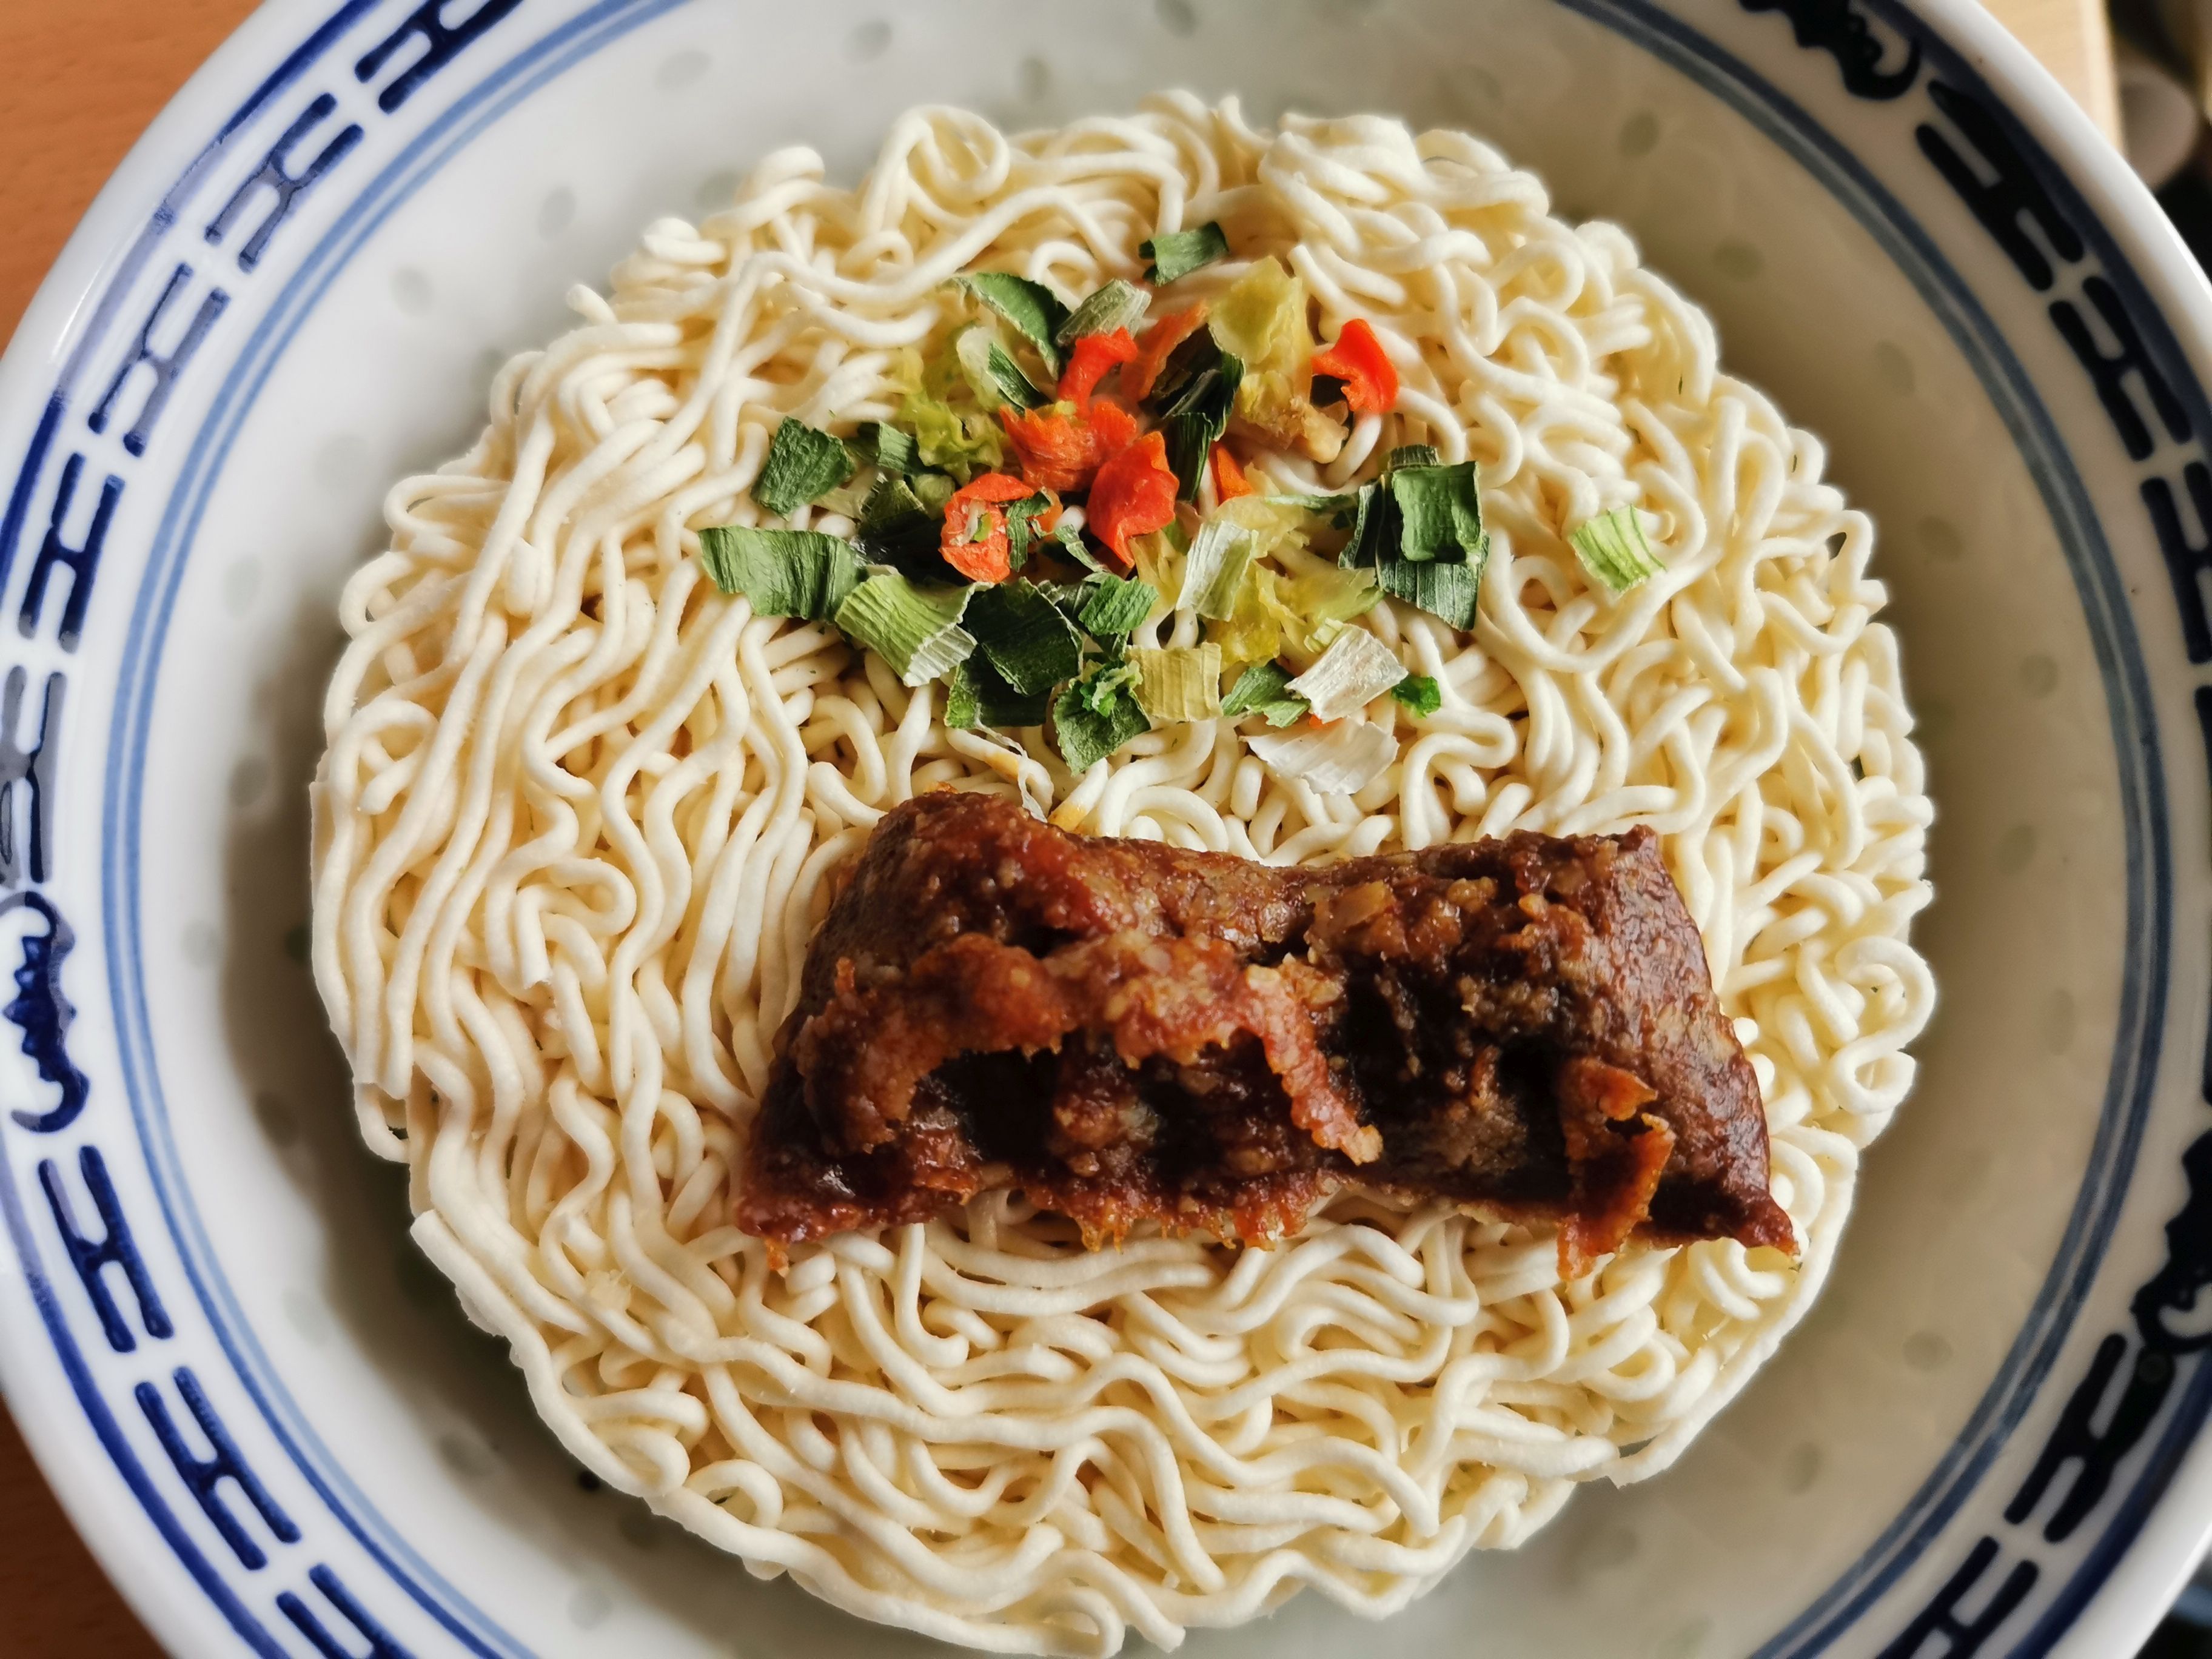 #2188: Baixiang "Artificial Chicken Soup Flavor Instant Noodles"